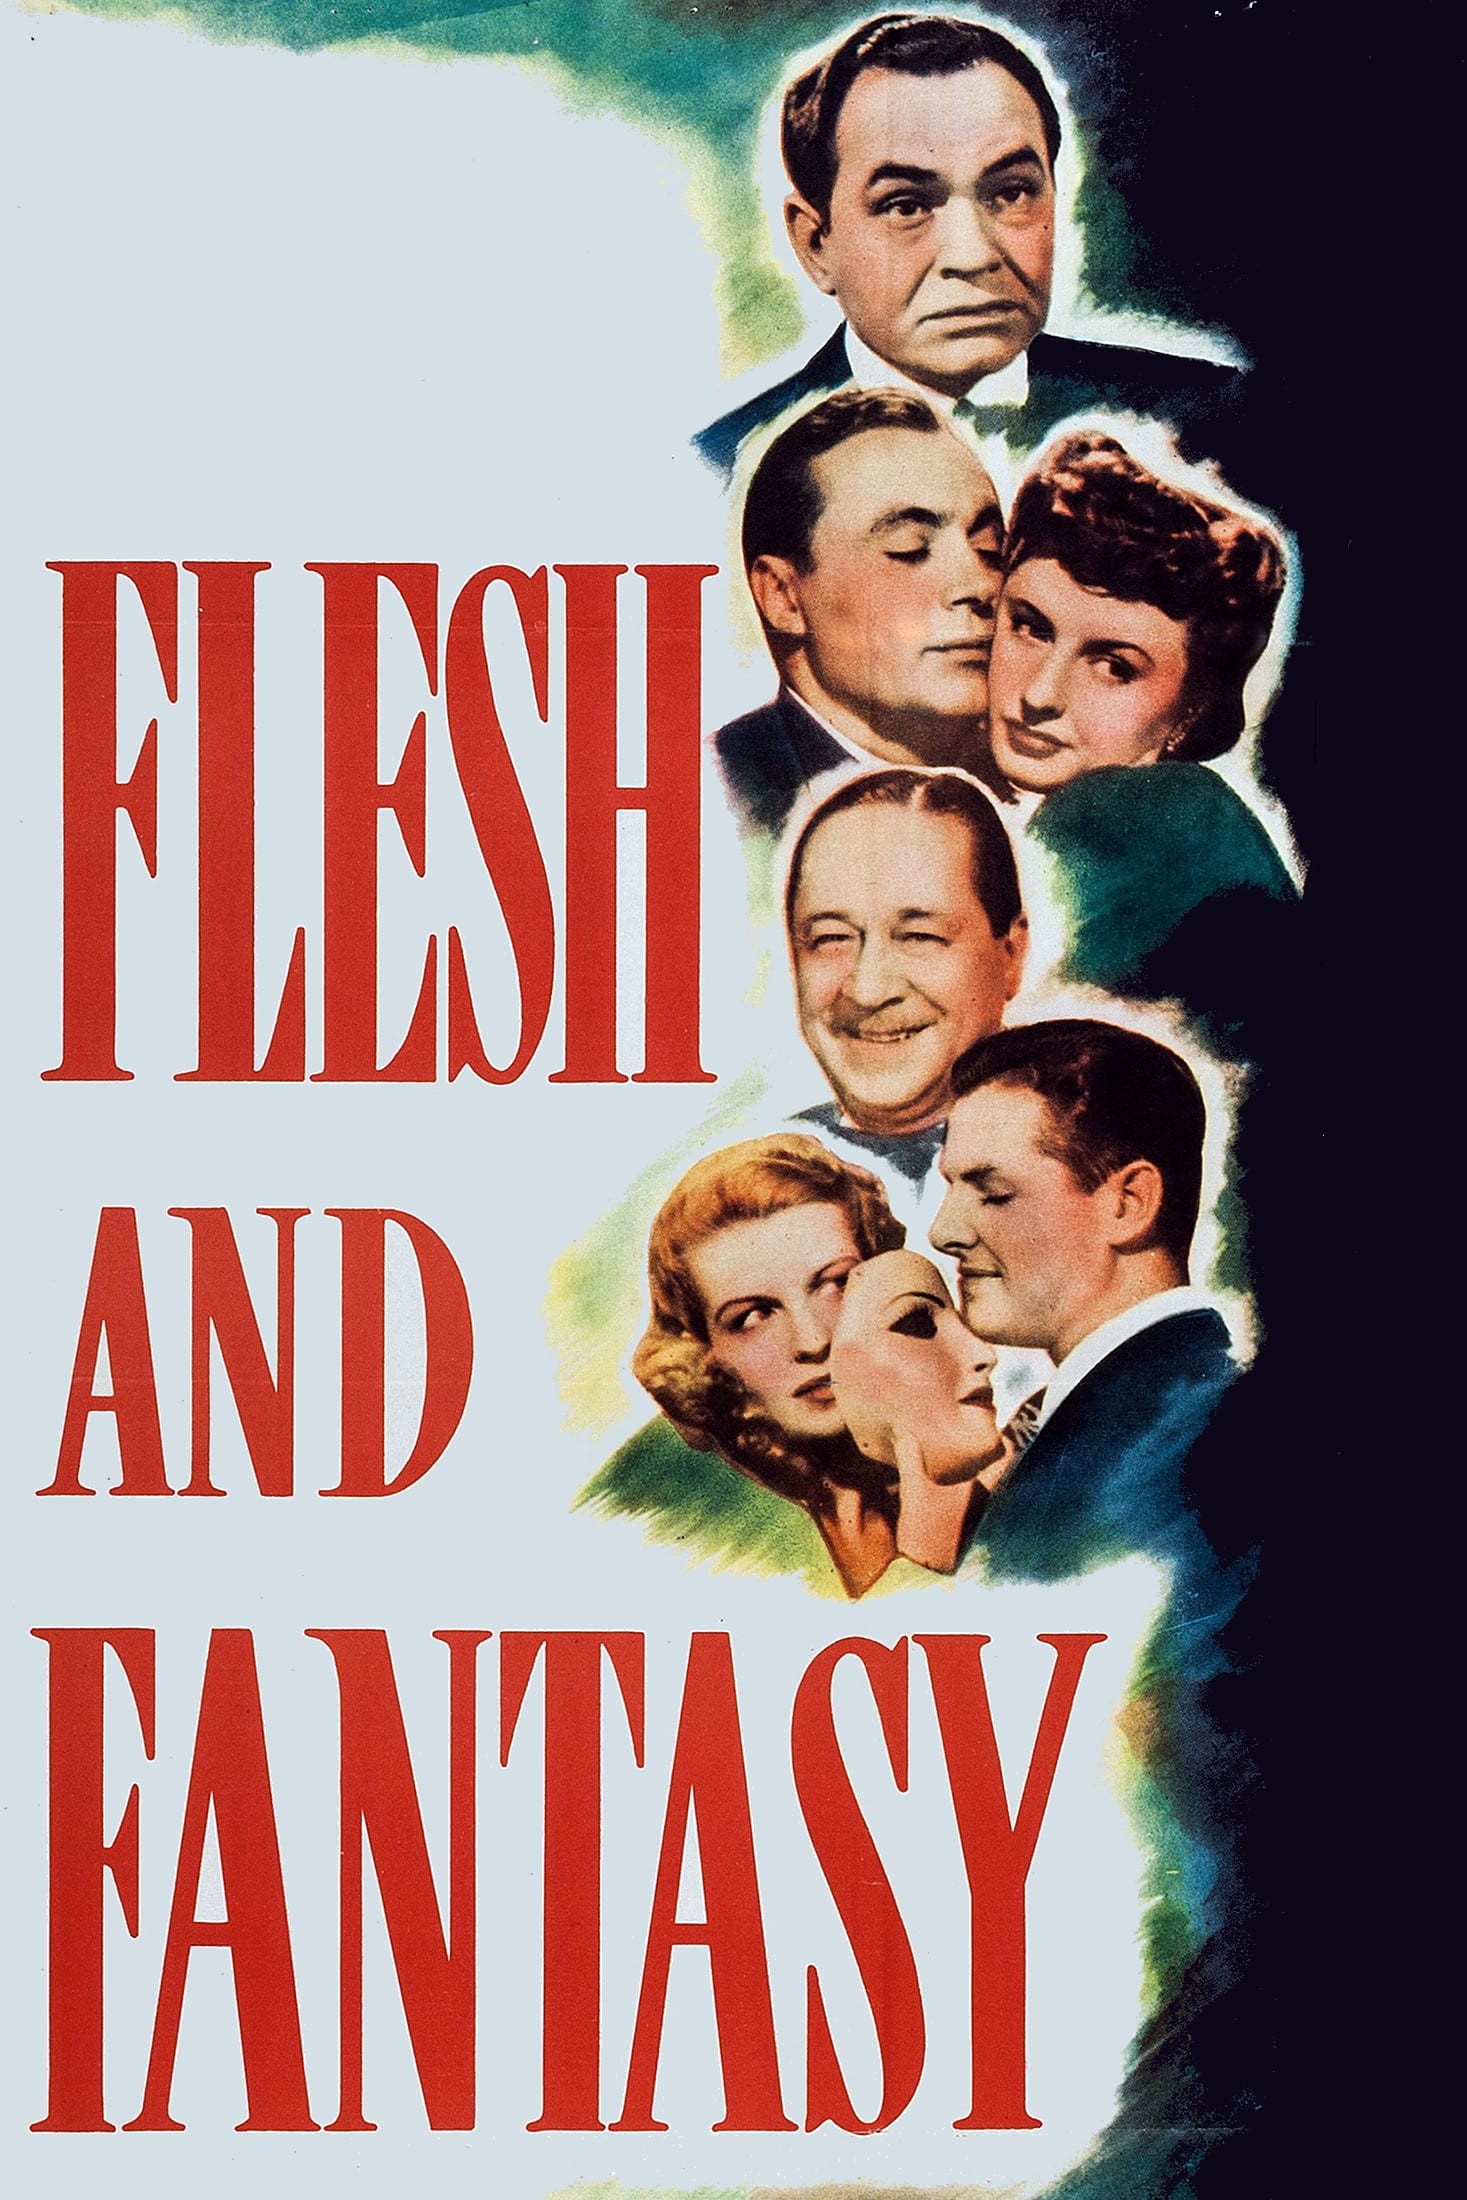 Flesh and Fantasy (1943)